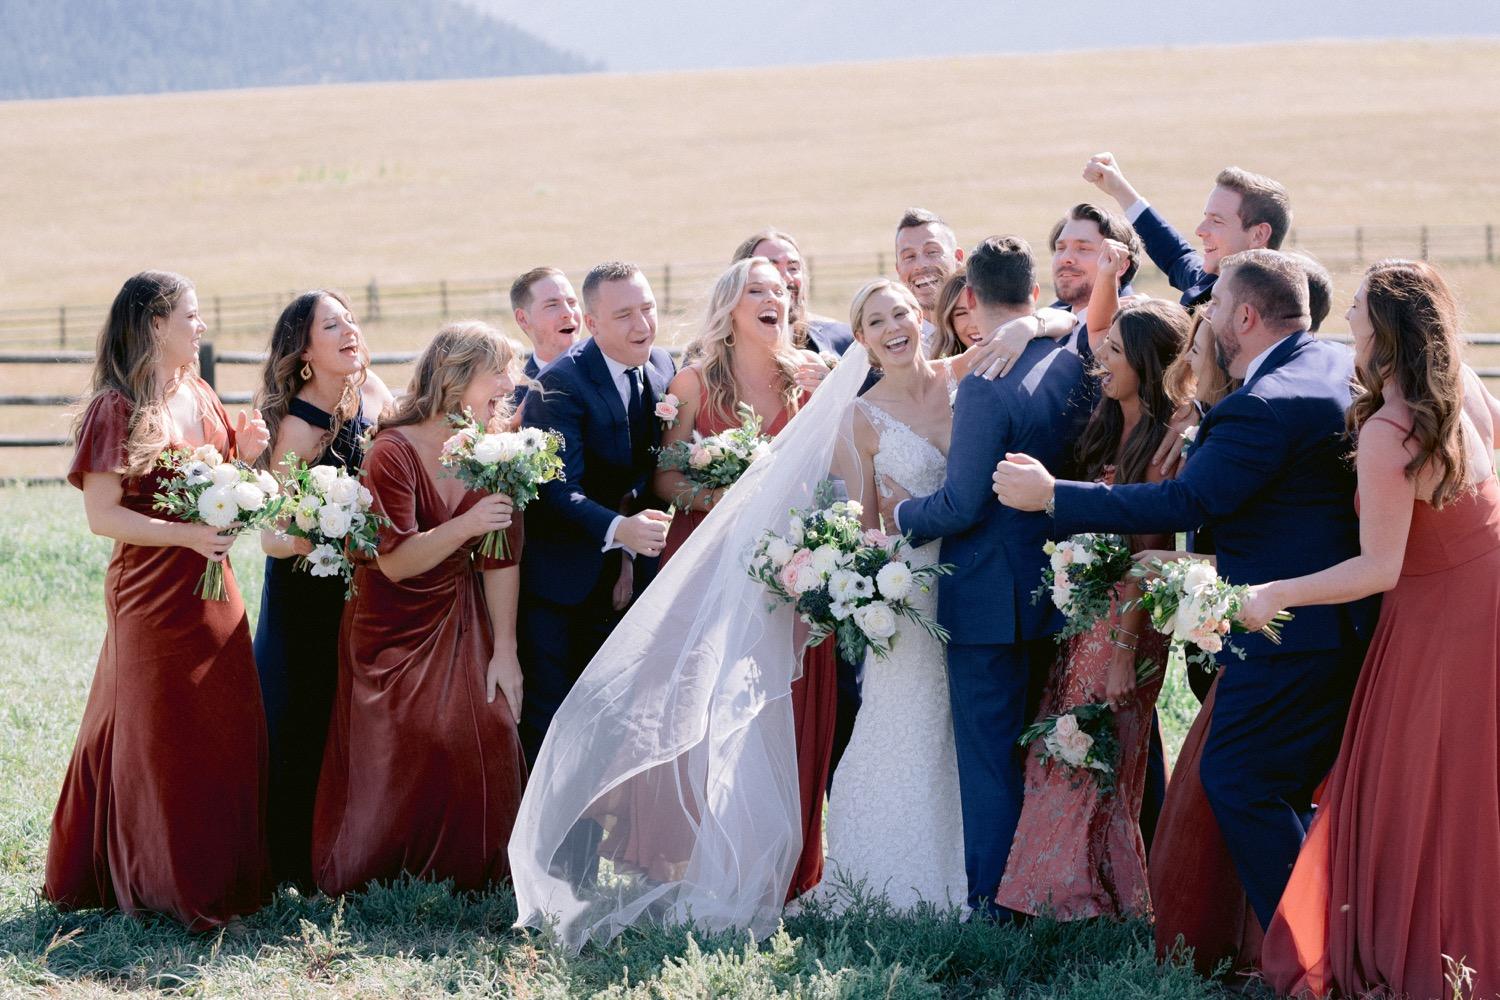 Wedding-party-at-Spruce-Mountain-Ranch-in-Colorado-Springs